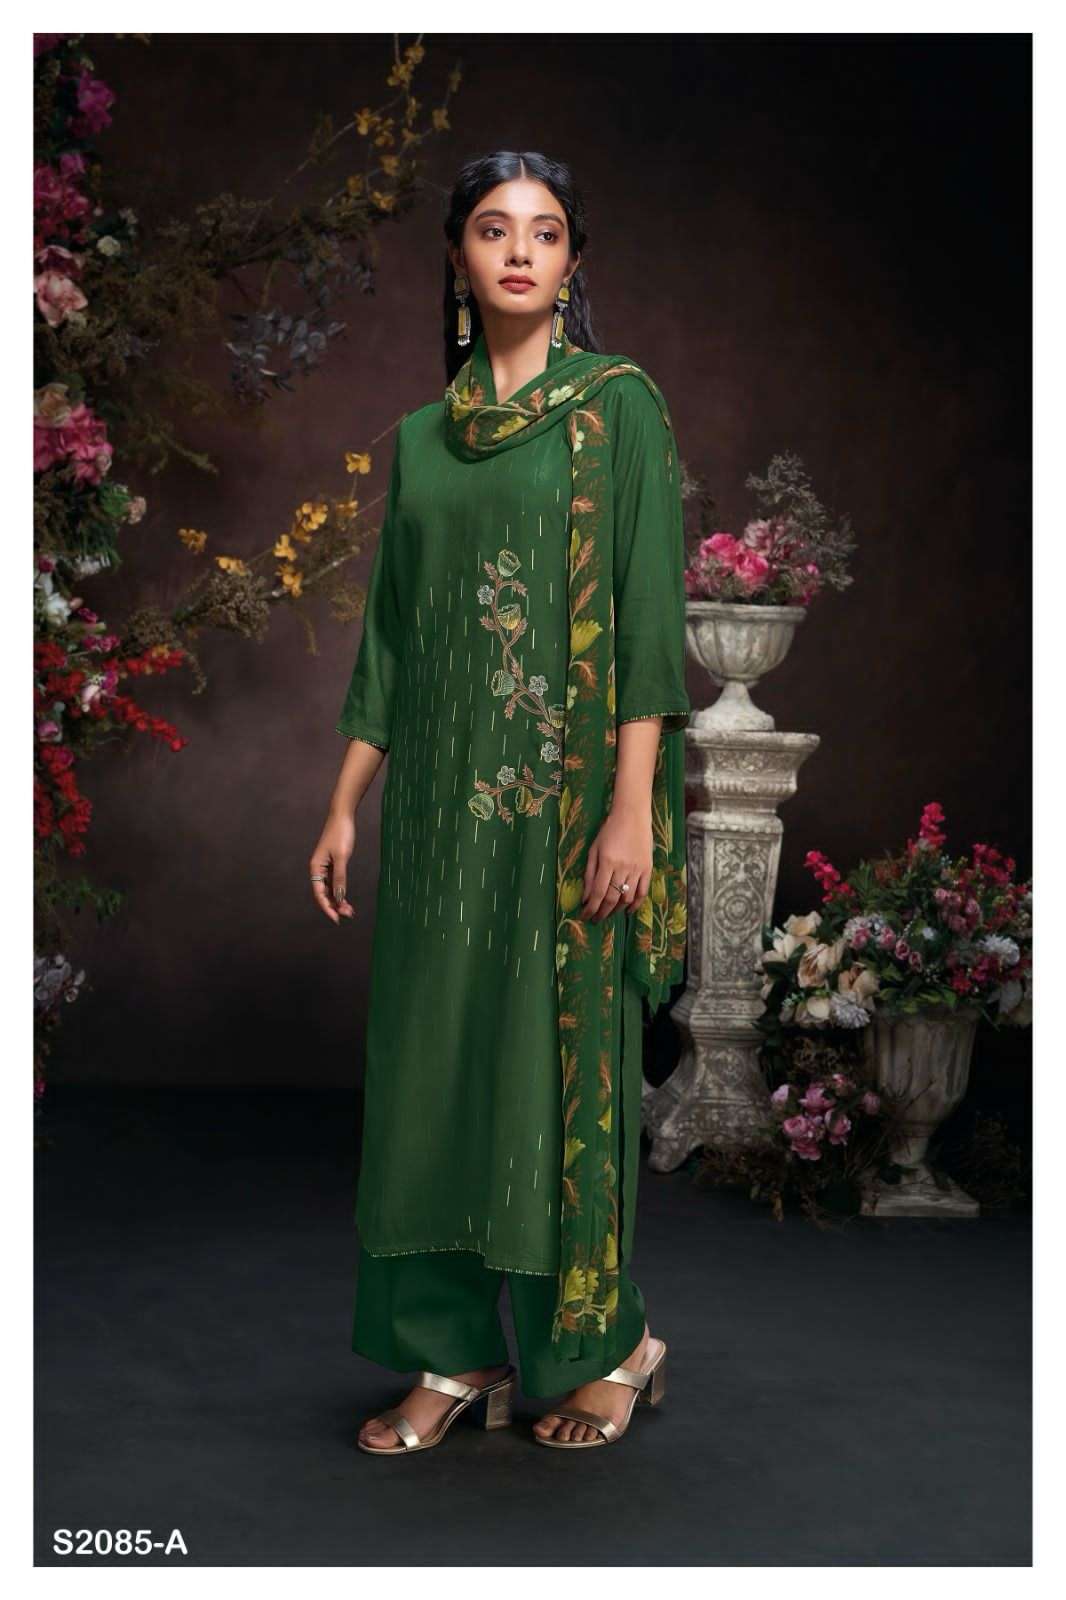 ganga abhiniti 2085 colour series designer wedding wear pakistani salwar kameez wholesaler surat gujarat